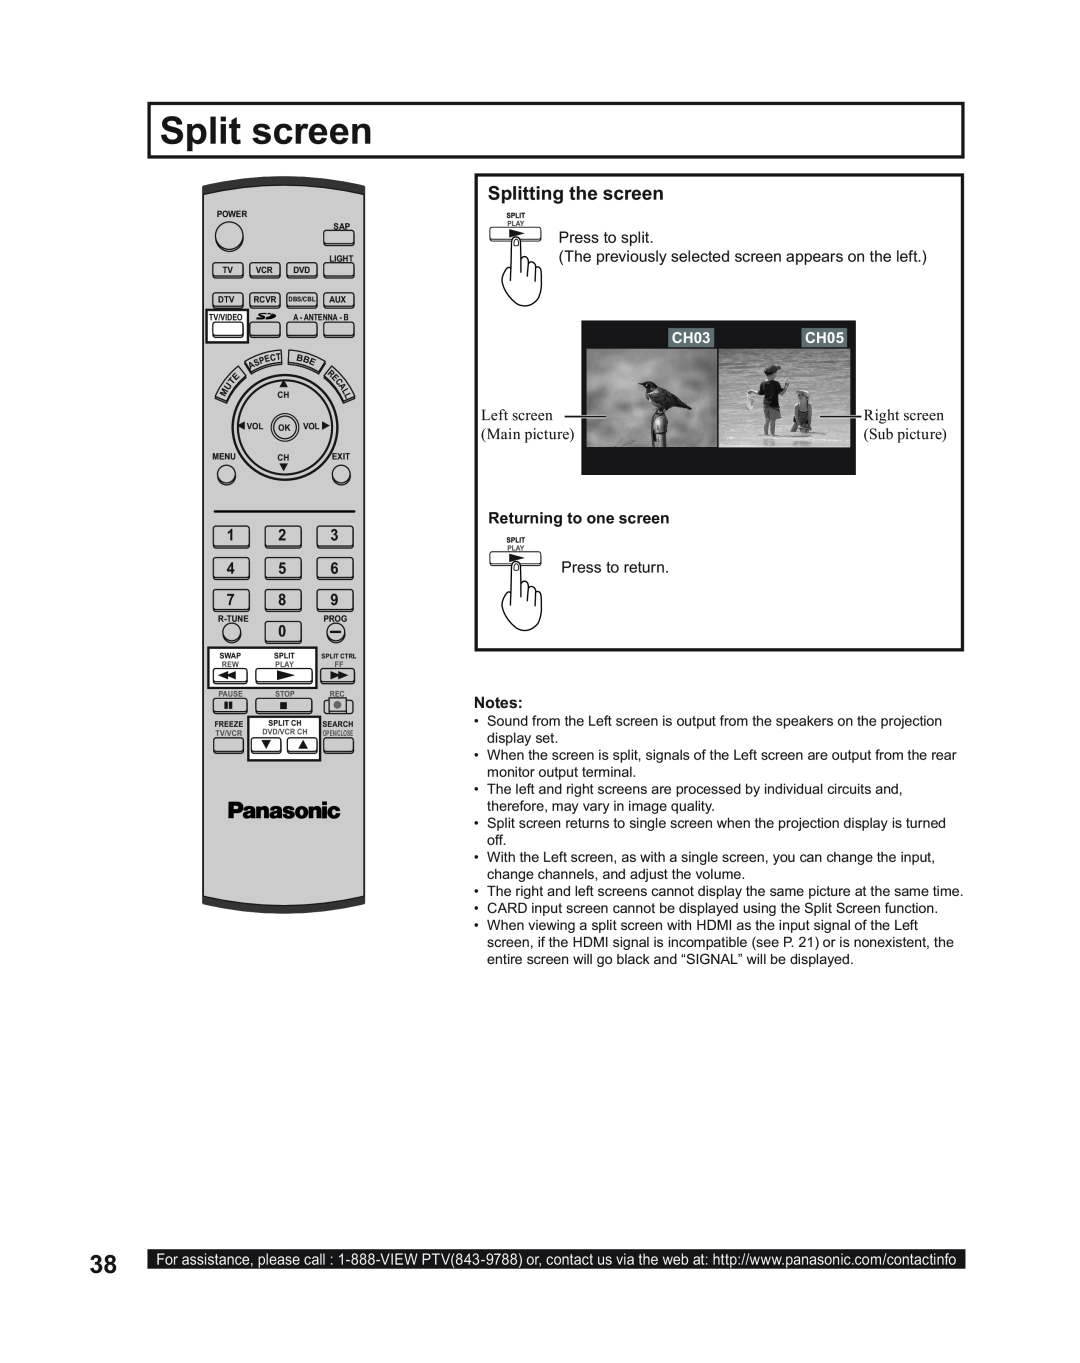 Panasonic PT-60LC14 Split screen, Splitting the screen, +&+, Left screen, Right screen, Main picture, Sub picture 